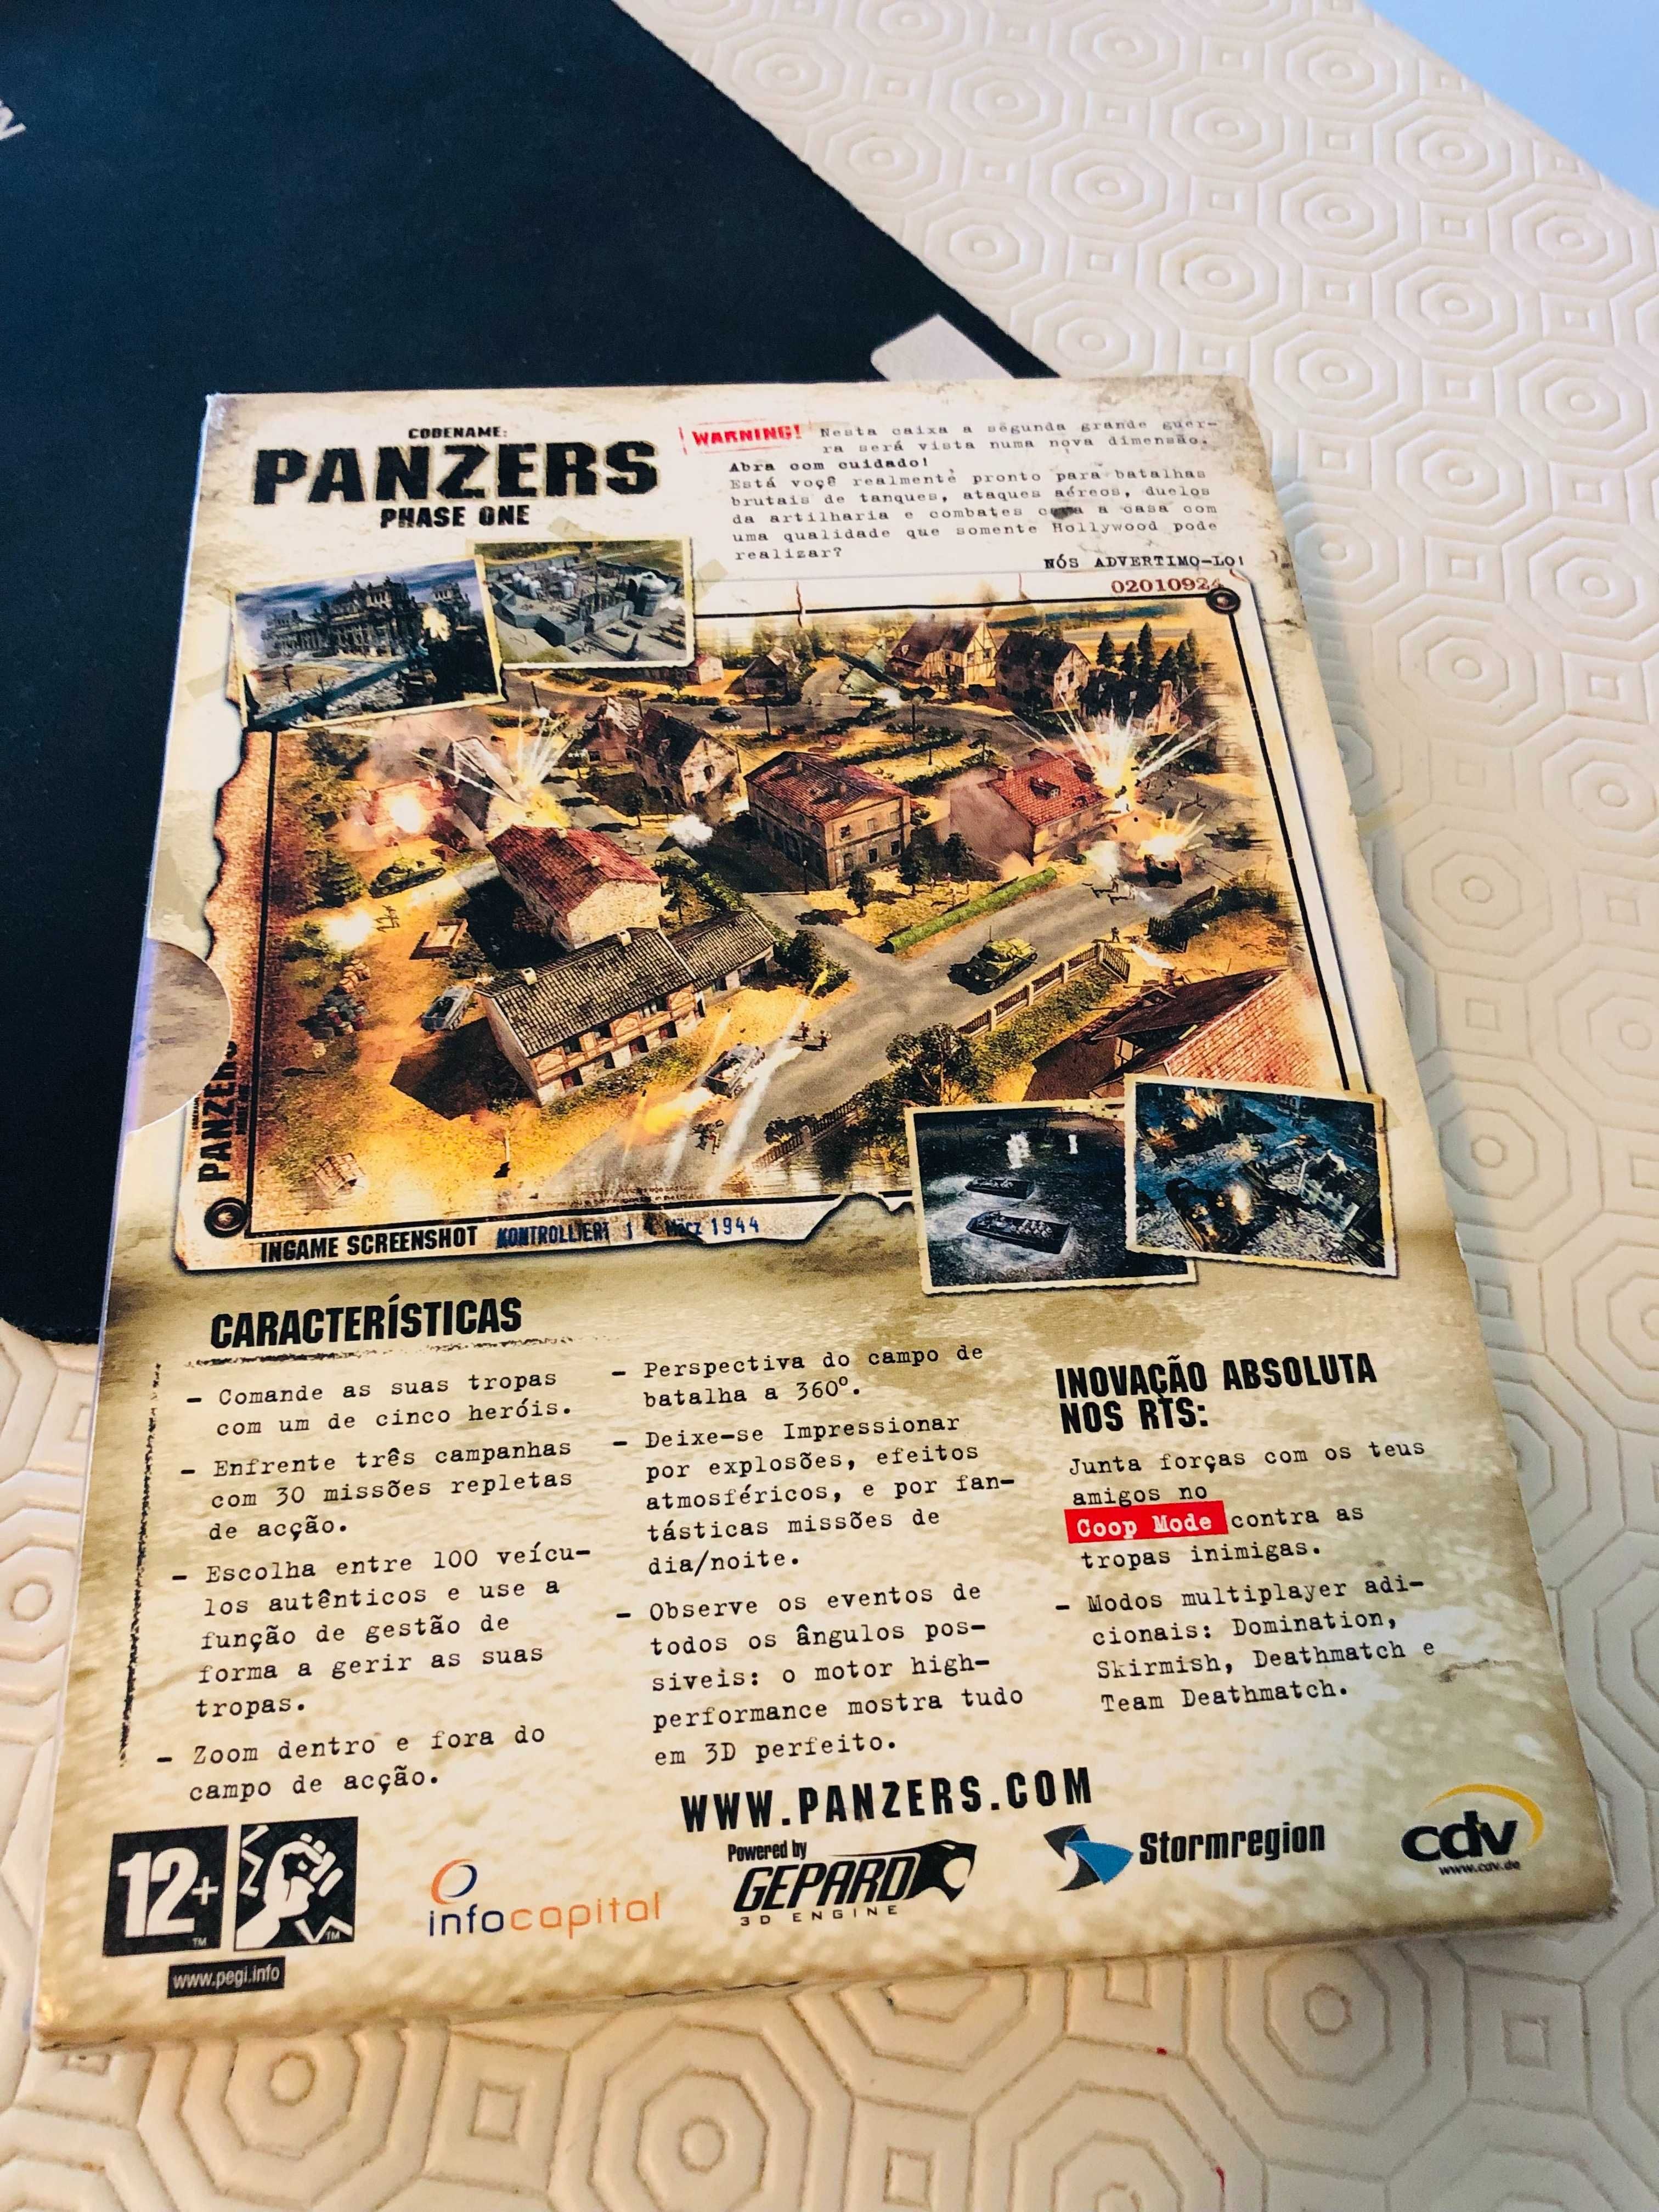 Jogo PC Codename Panzers – Phase One